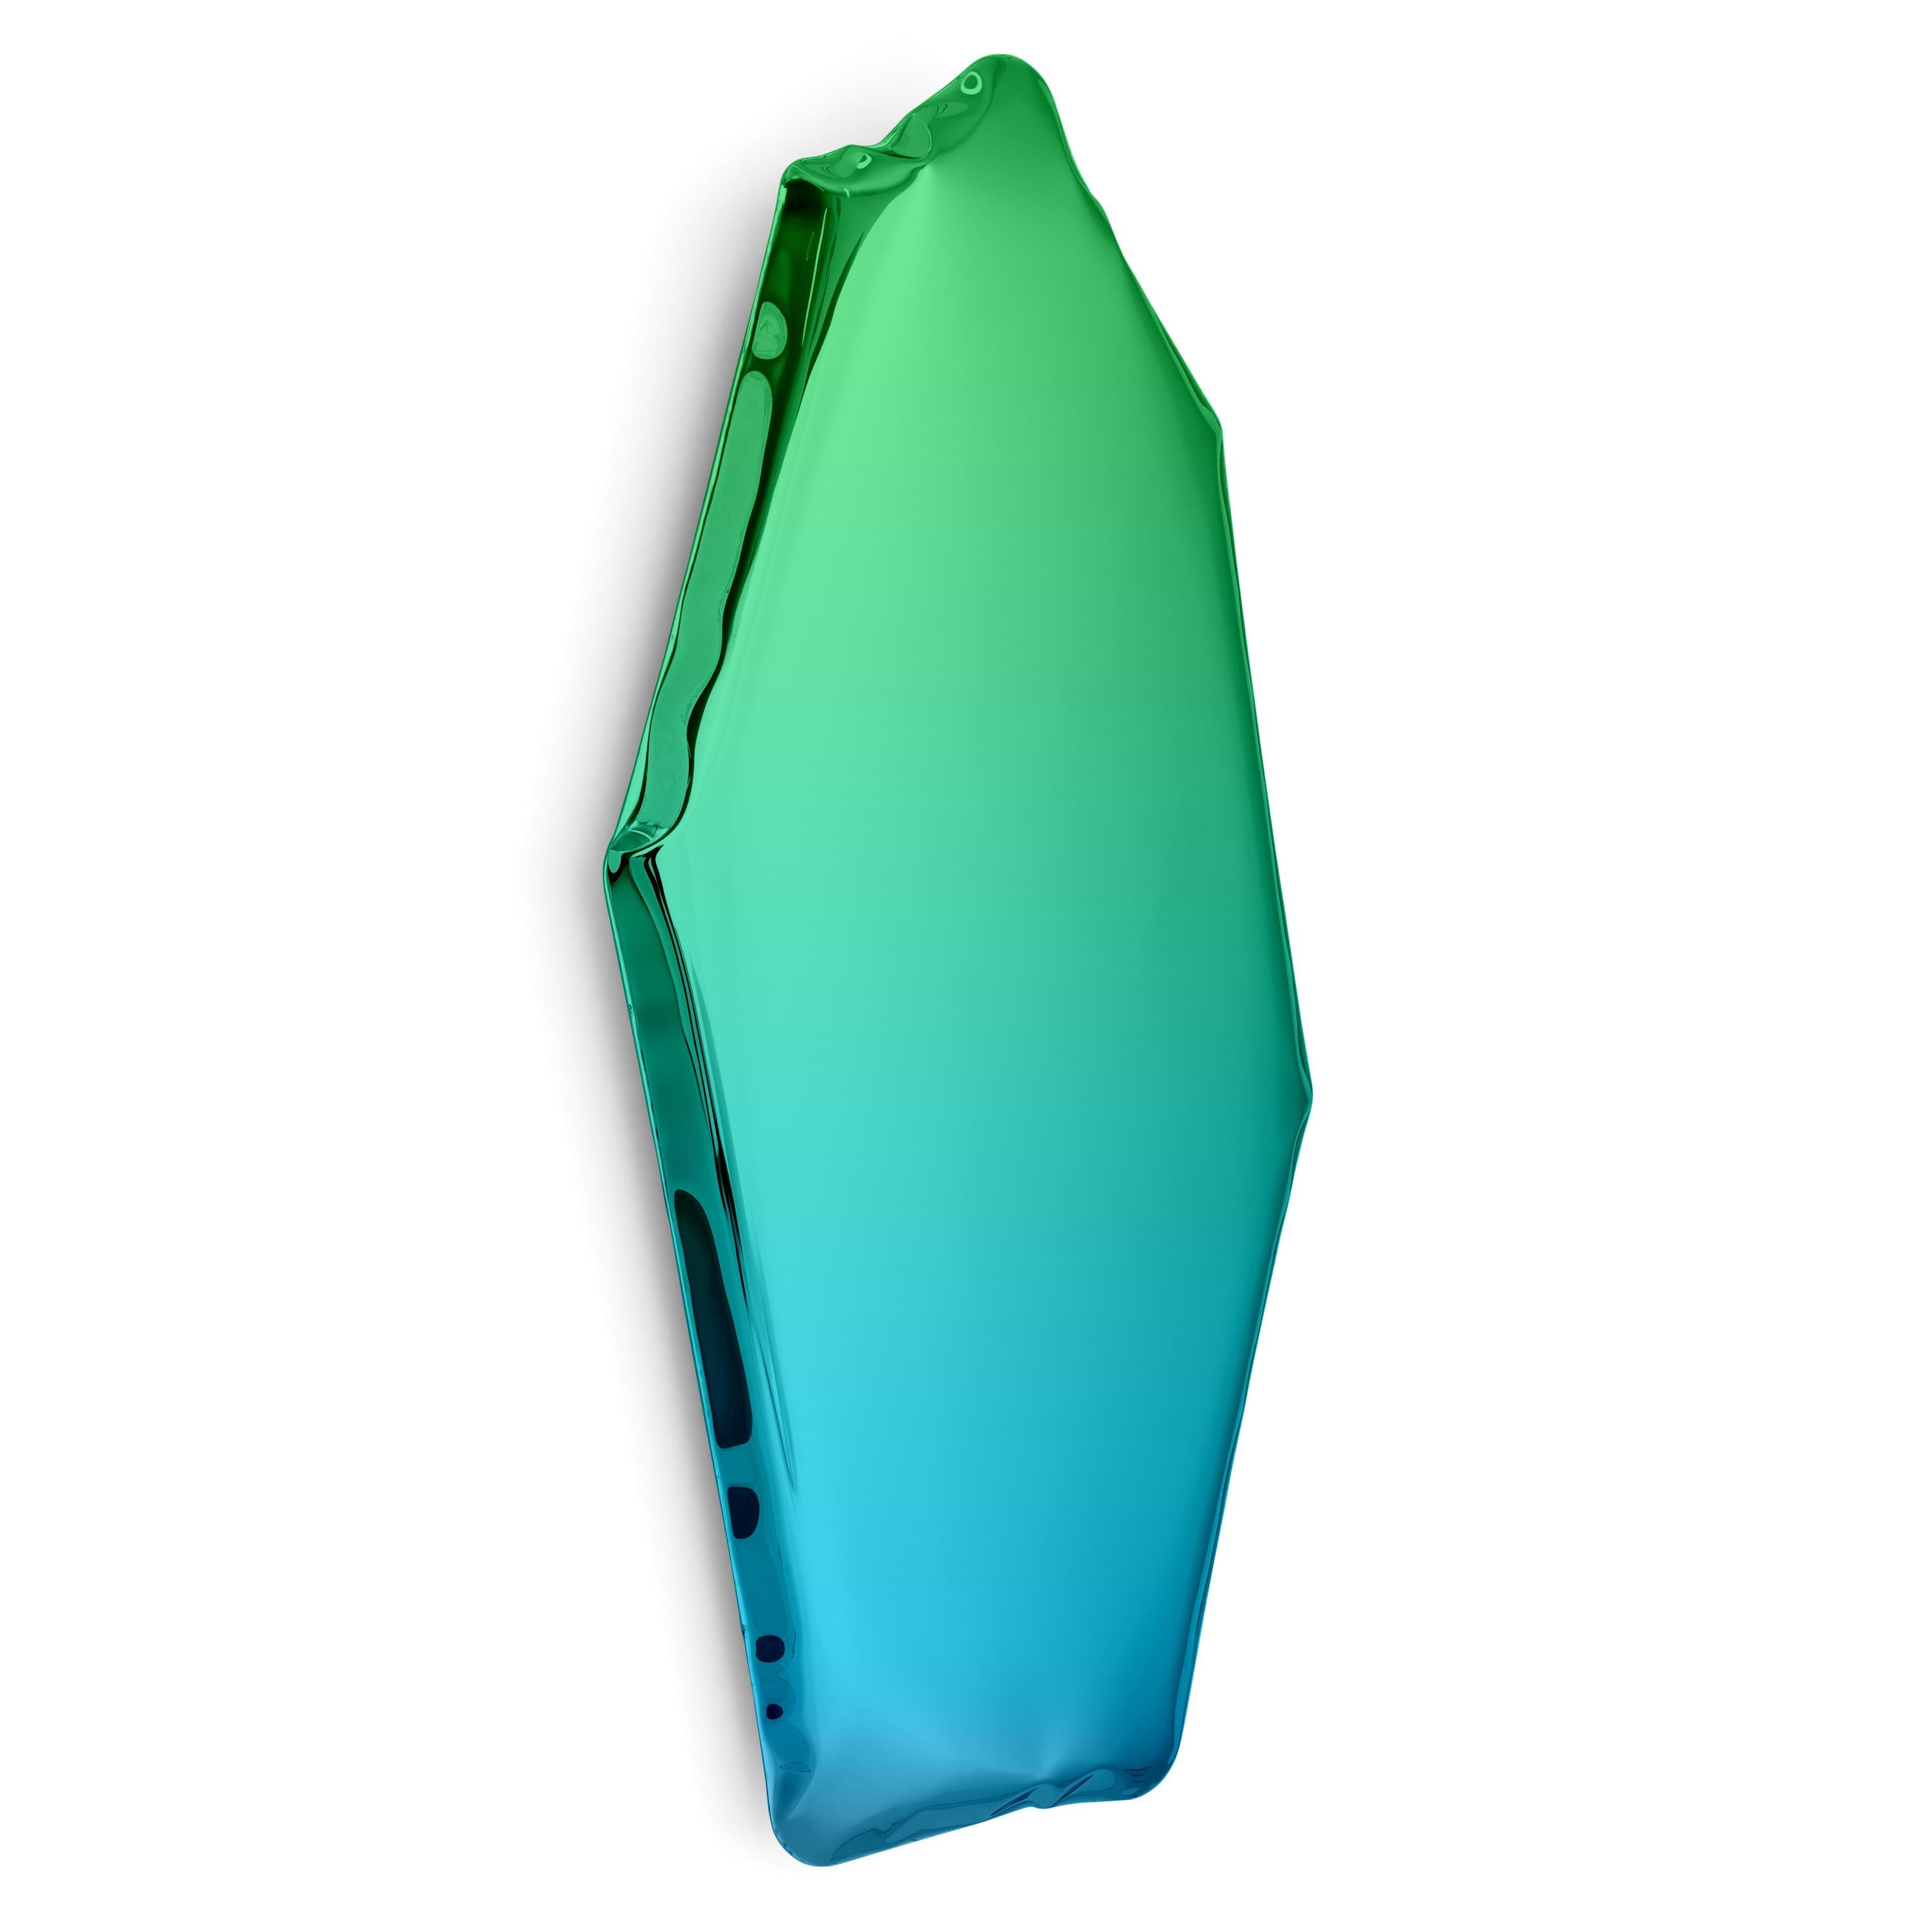 Skulpturaler Wandspiegel Sapphire Emerald C4 von Zieta
Abmessungen: T 6 x B 50 x H 100 cm 
MATERIAL: Rostfreier Stahl. 
Ausführung: Saphir/Smaragd.
Erhältlich in den Ausführungen: Edelstahl, Deep Space Blue, Smaragd, Saphir, Saphir/Smaragd, Dark